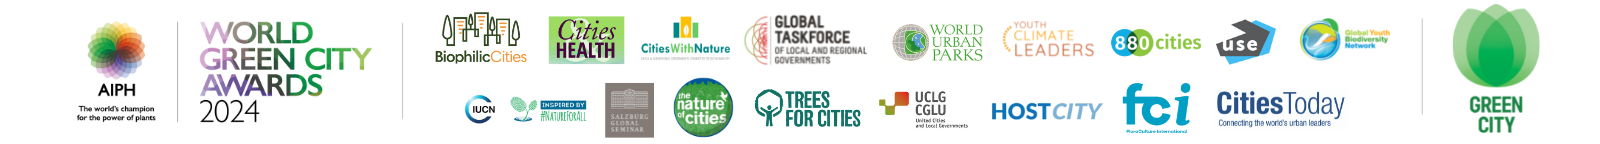 Partner logos for the AIPH World Green City Awards 2024